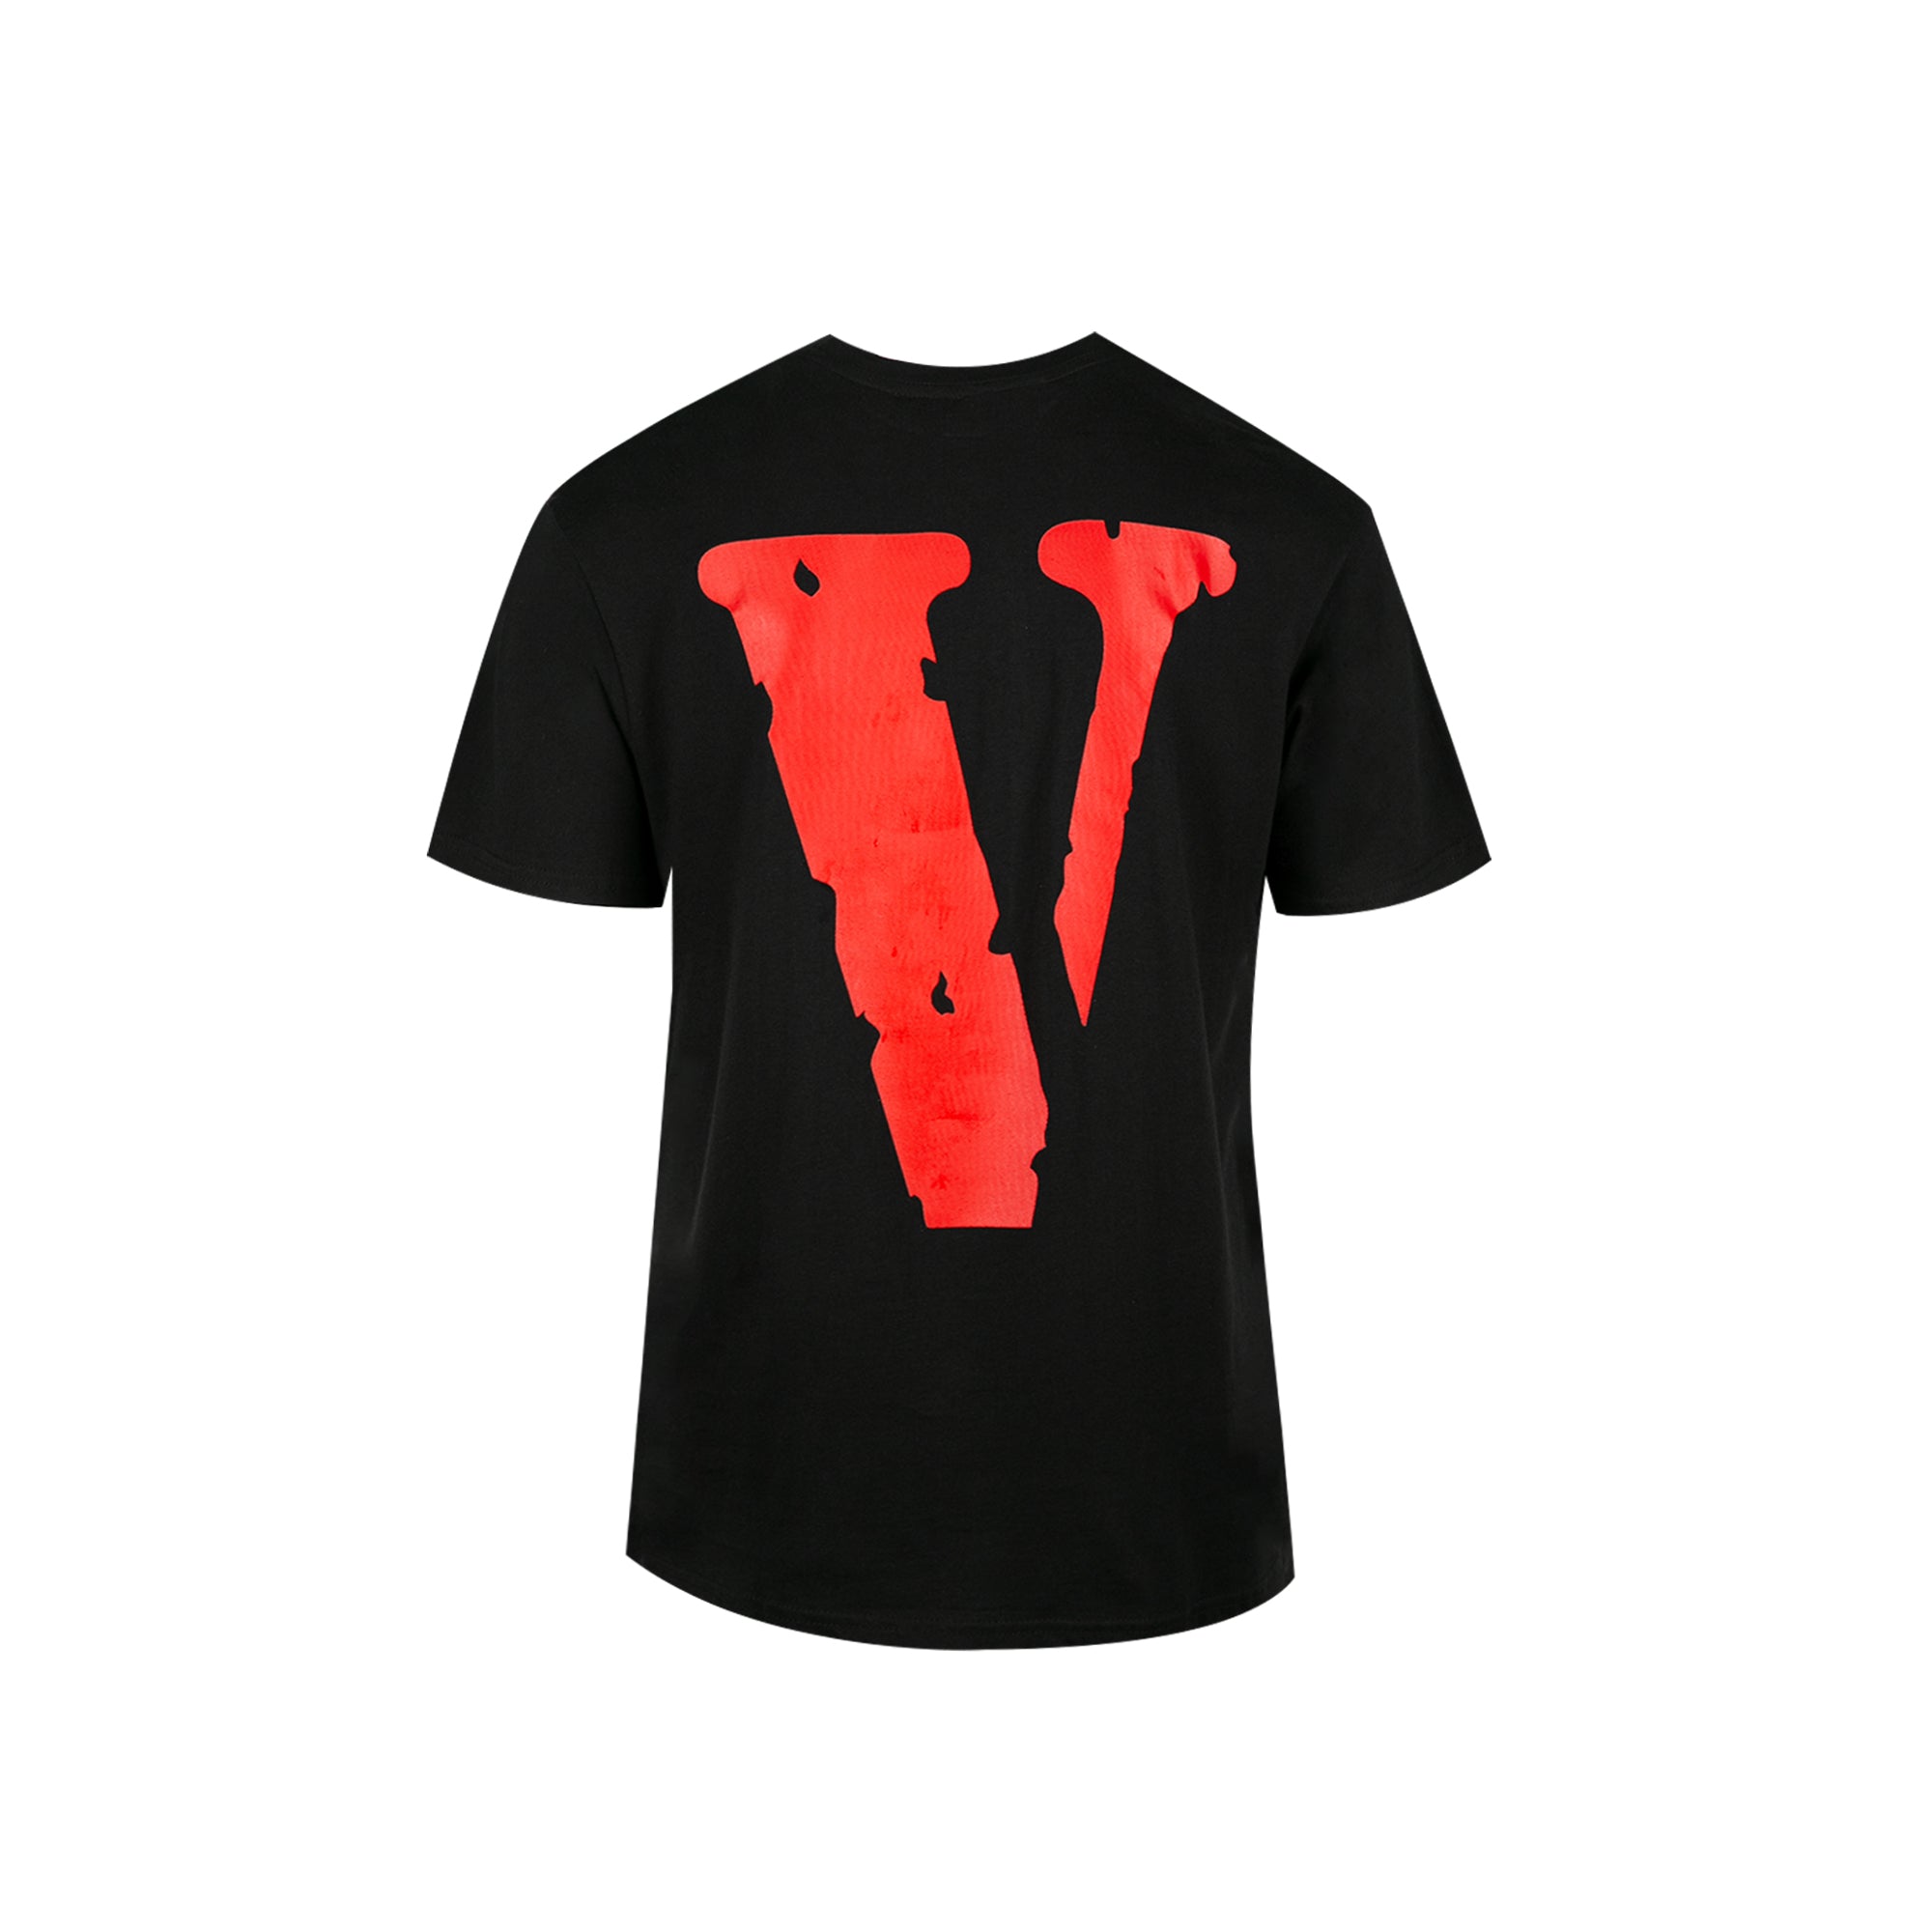 Vlone Staple Cotton Black/ Red T-Shirt